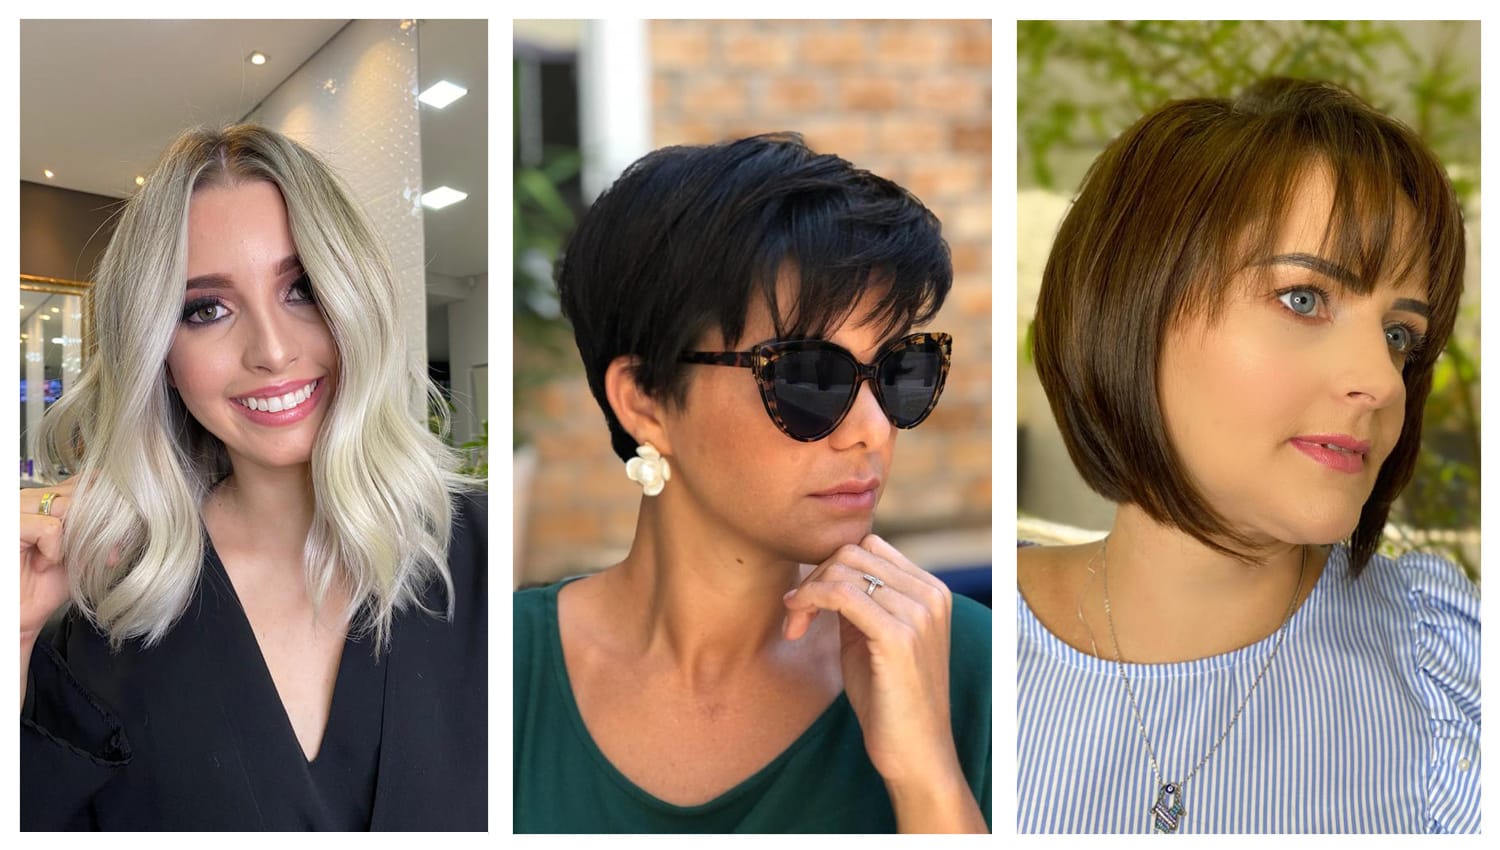 Corte de cabelo 2020 - Principais tendências da temporada  Cabelo curto  iluminado, Cabelo curto bonito, Cabelo curto feminino